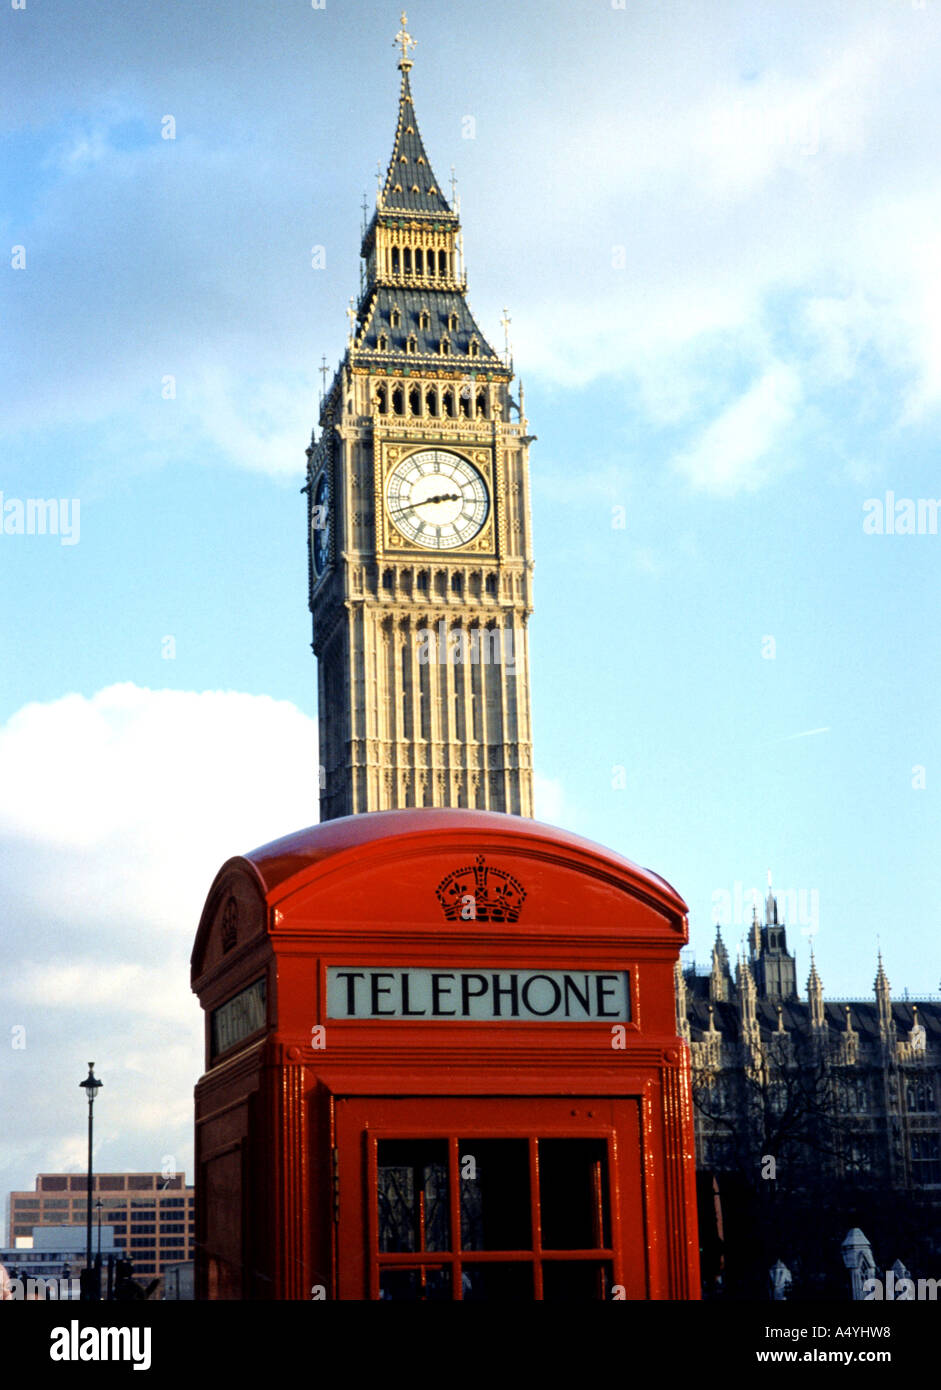 Big Ben behind a phone booth Stock Photo